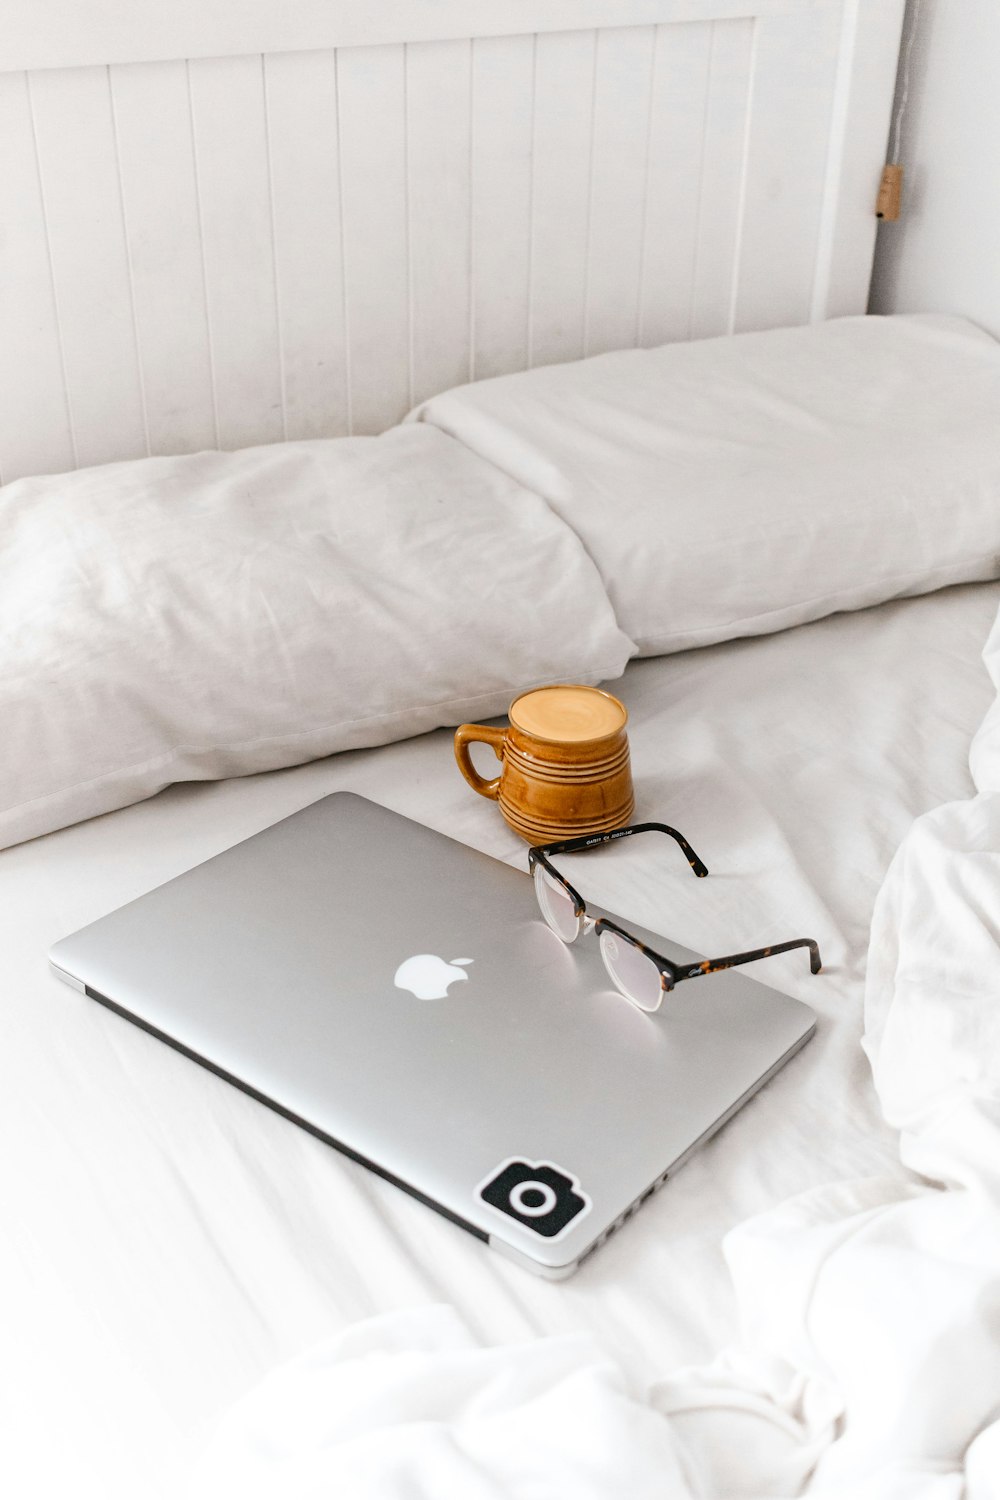 macbook air on white bed photo – Free Port elizabeth Image on Unsplash